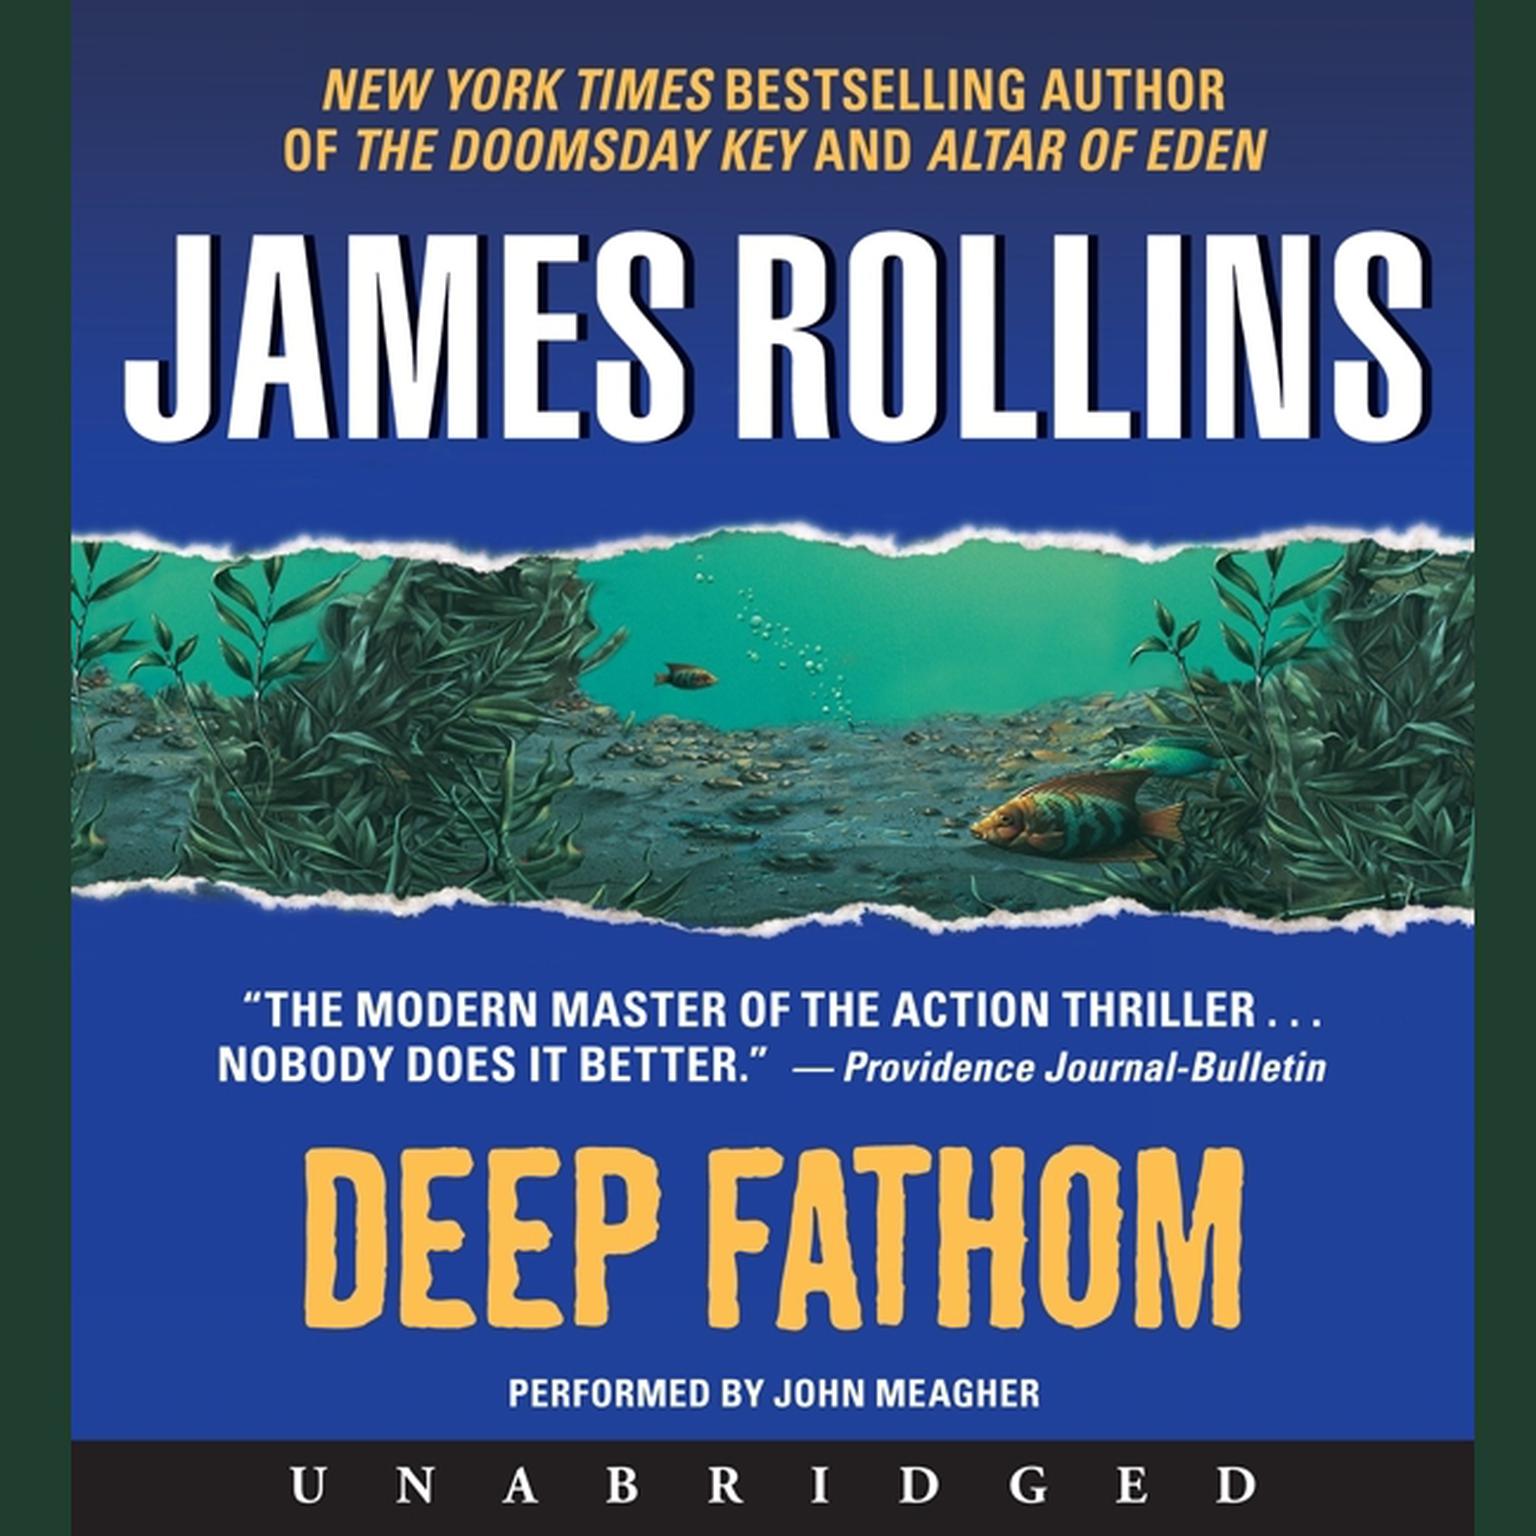 Deep Fathom Audiobook, by James Rollins